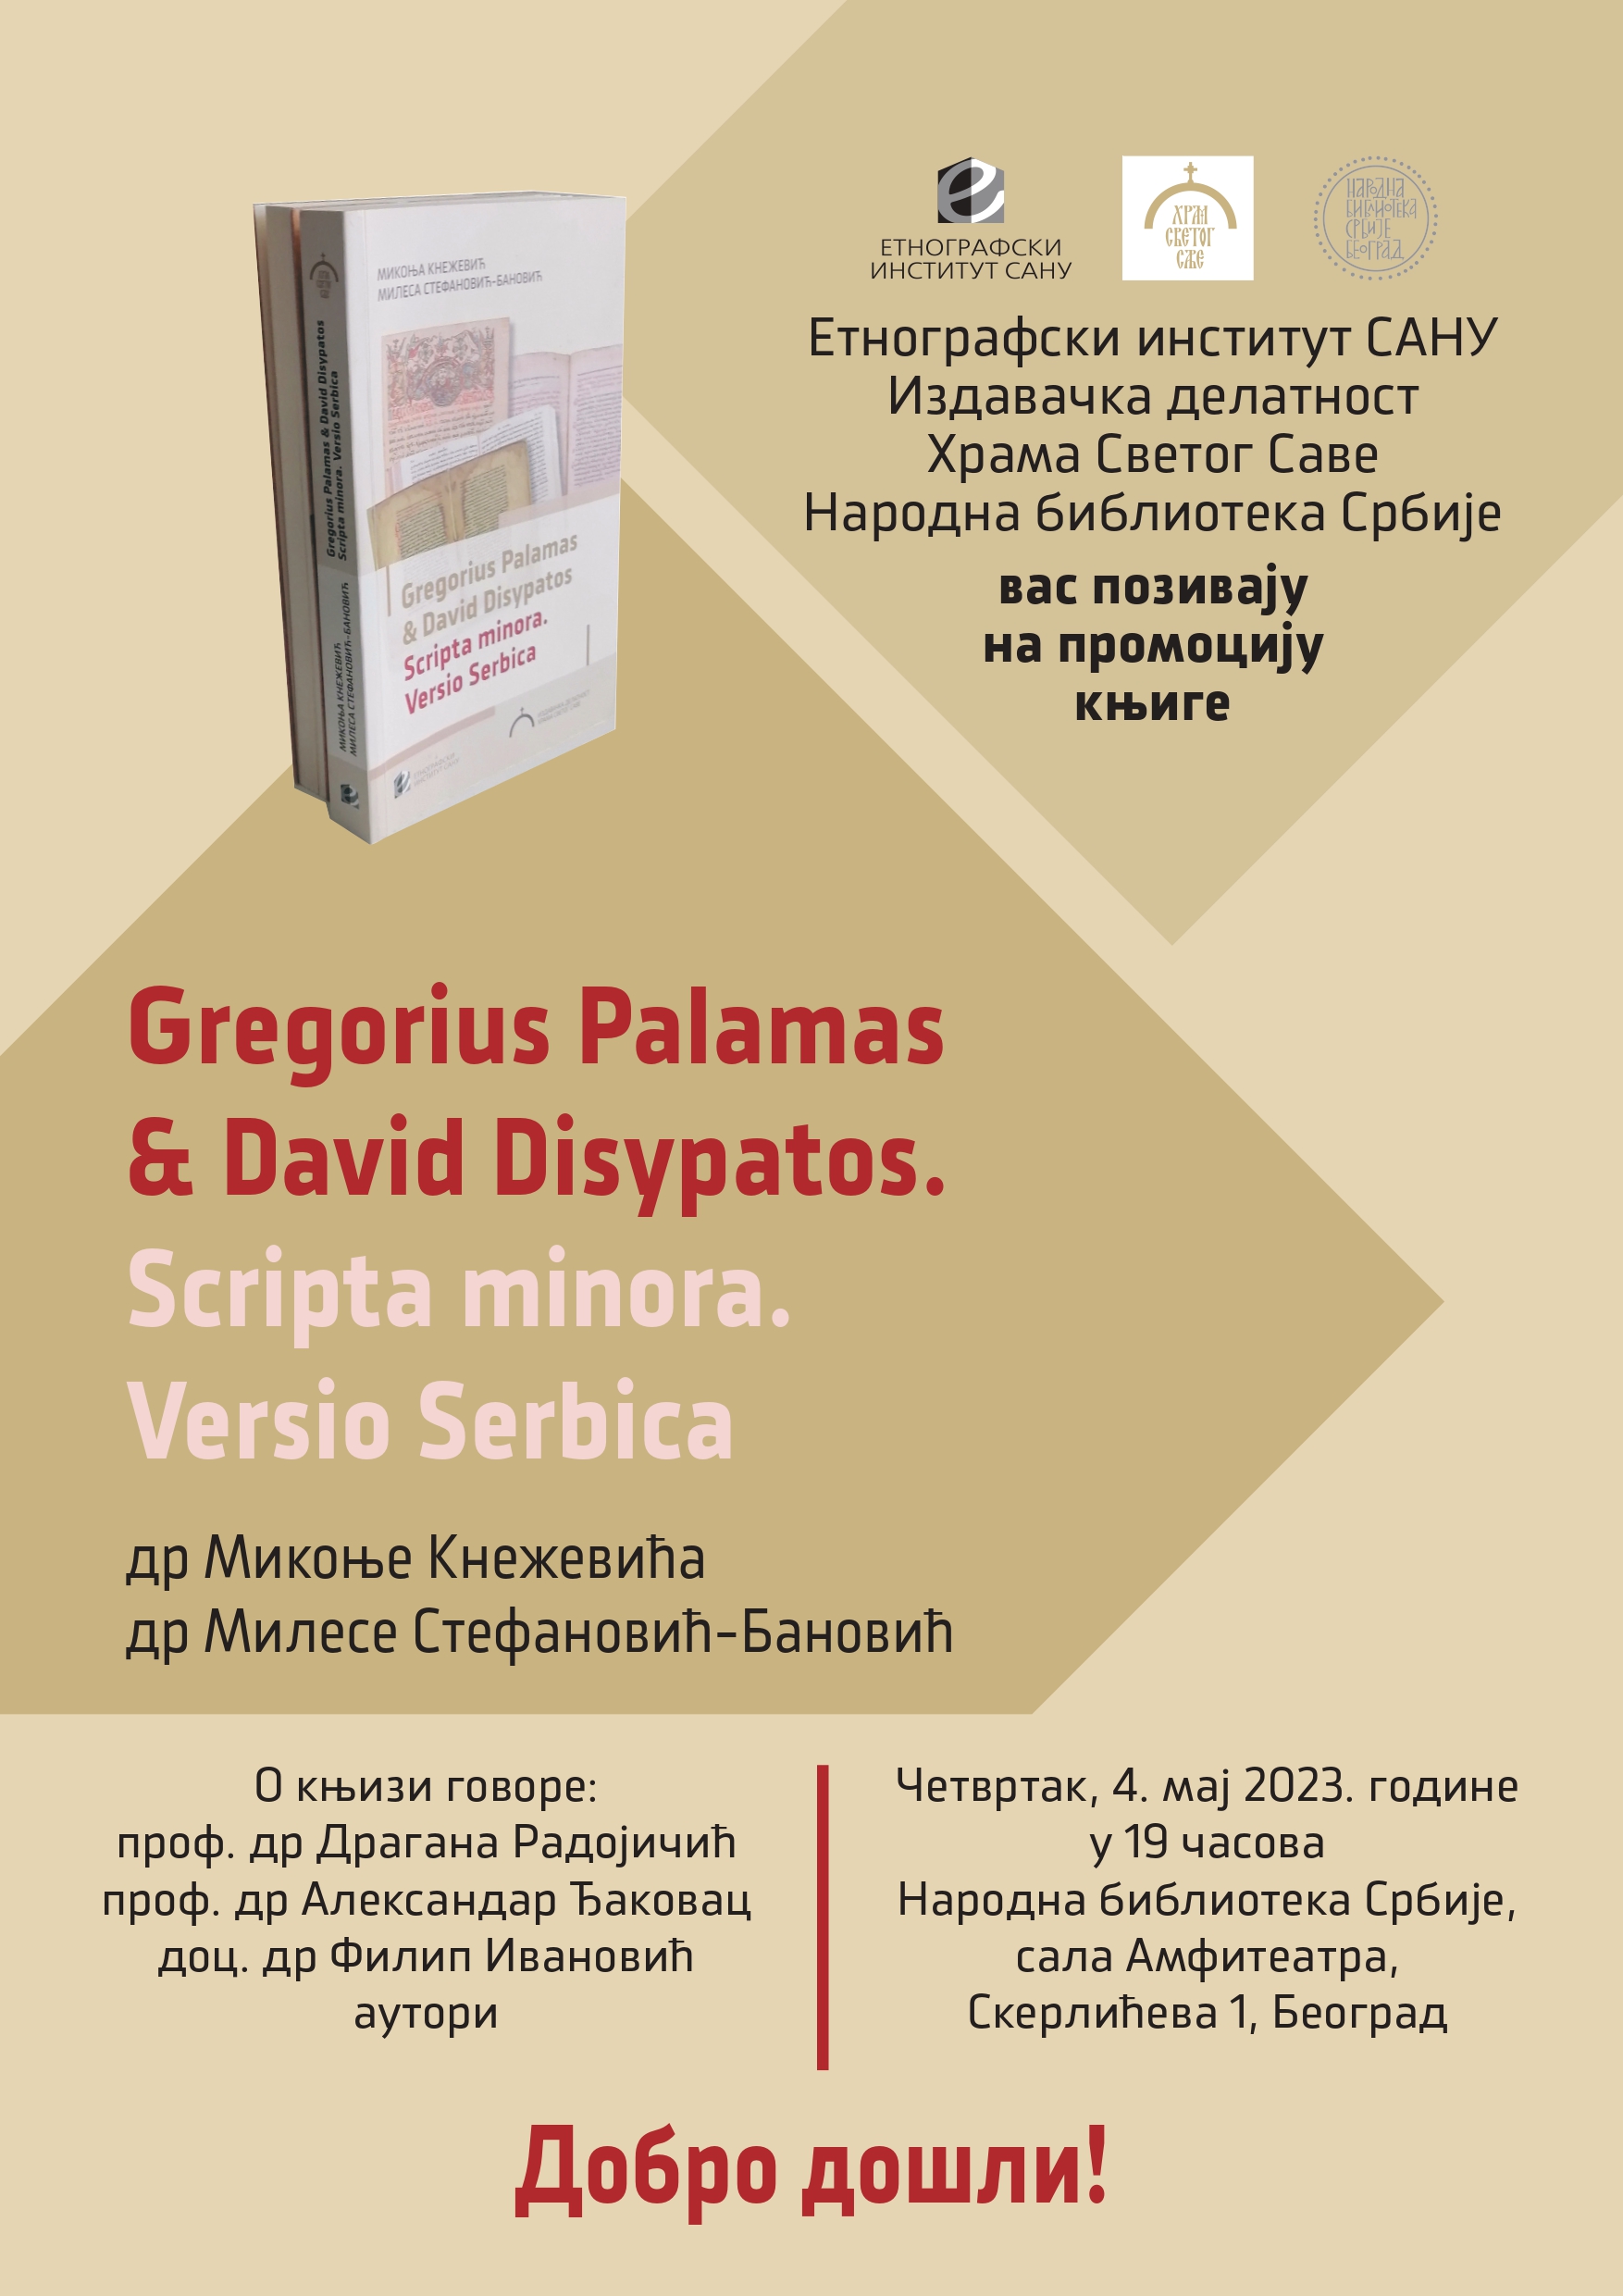 Announcement of the promotion of the book co-authored by Mikonja Knežević, PhD and Milesa Stefanović-Banović, PhD